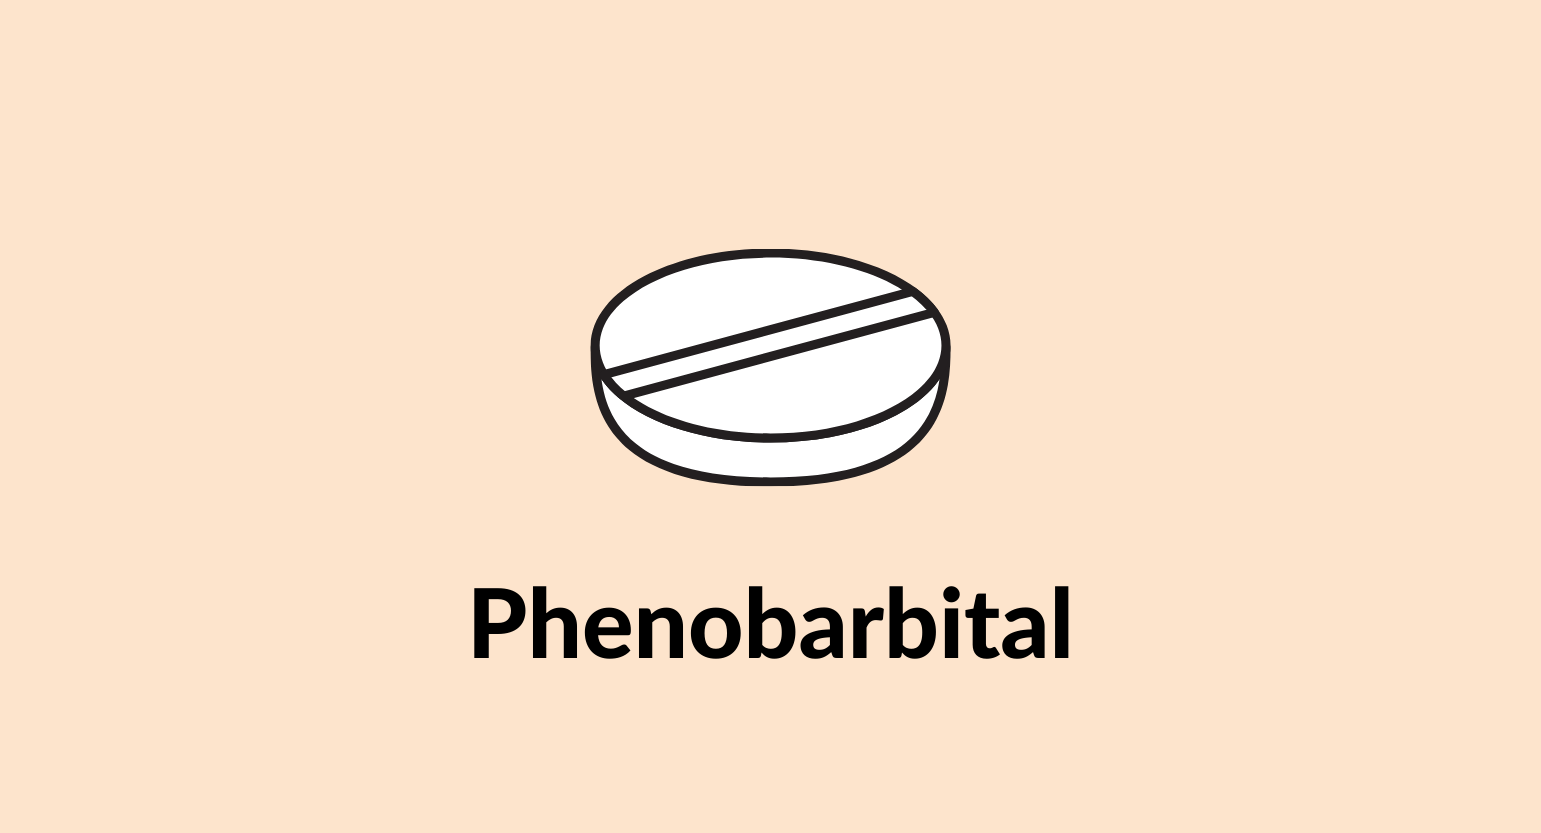 Illustration of a phenobarbital tablet